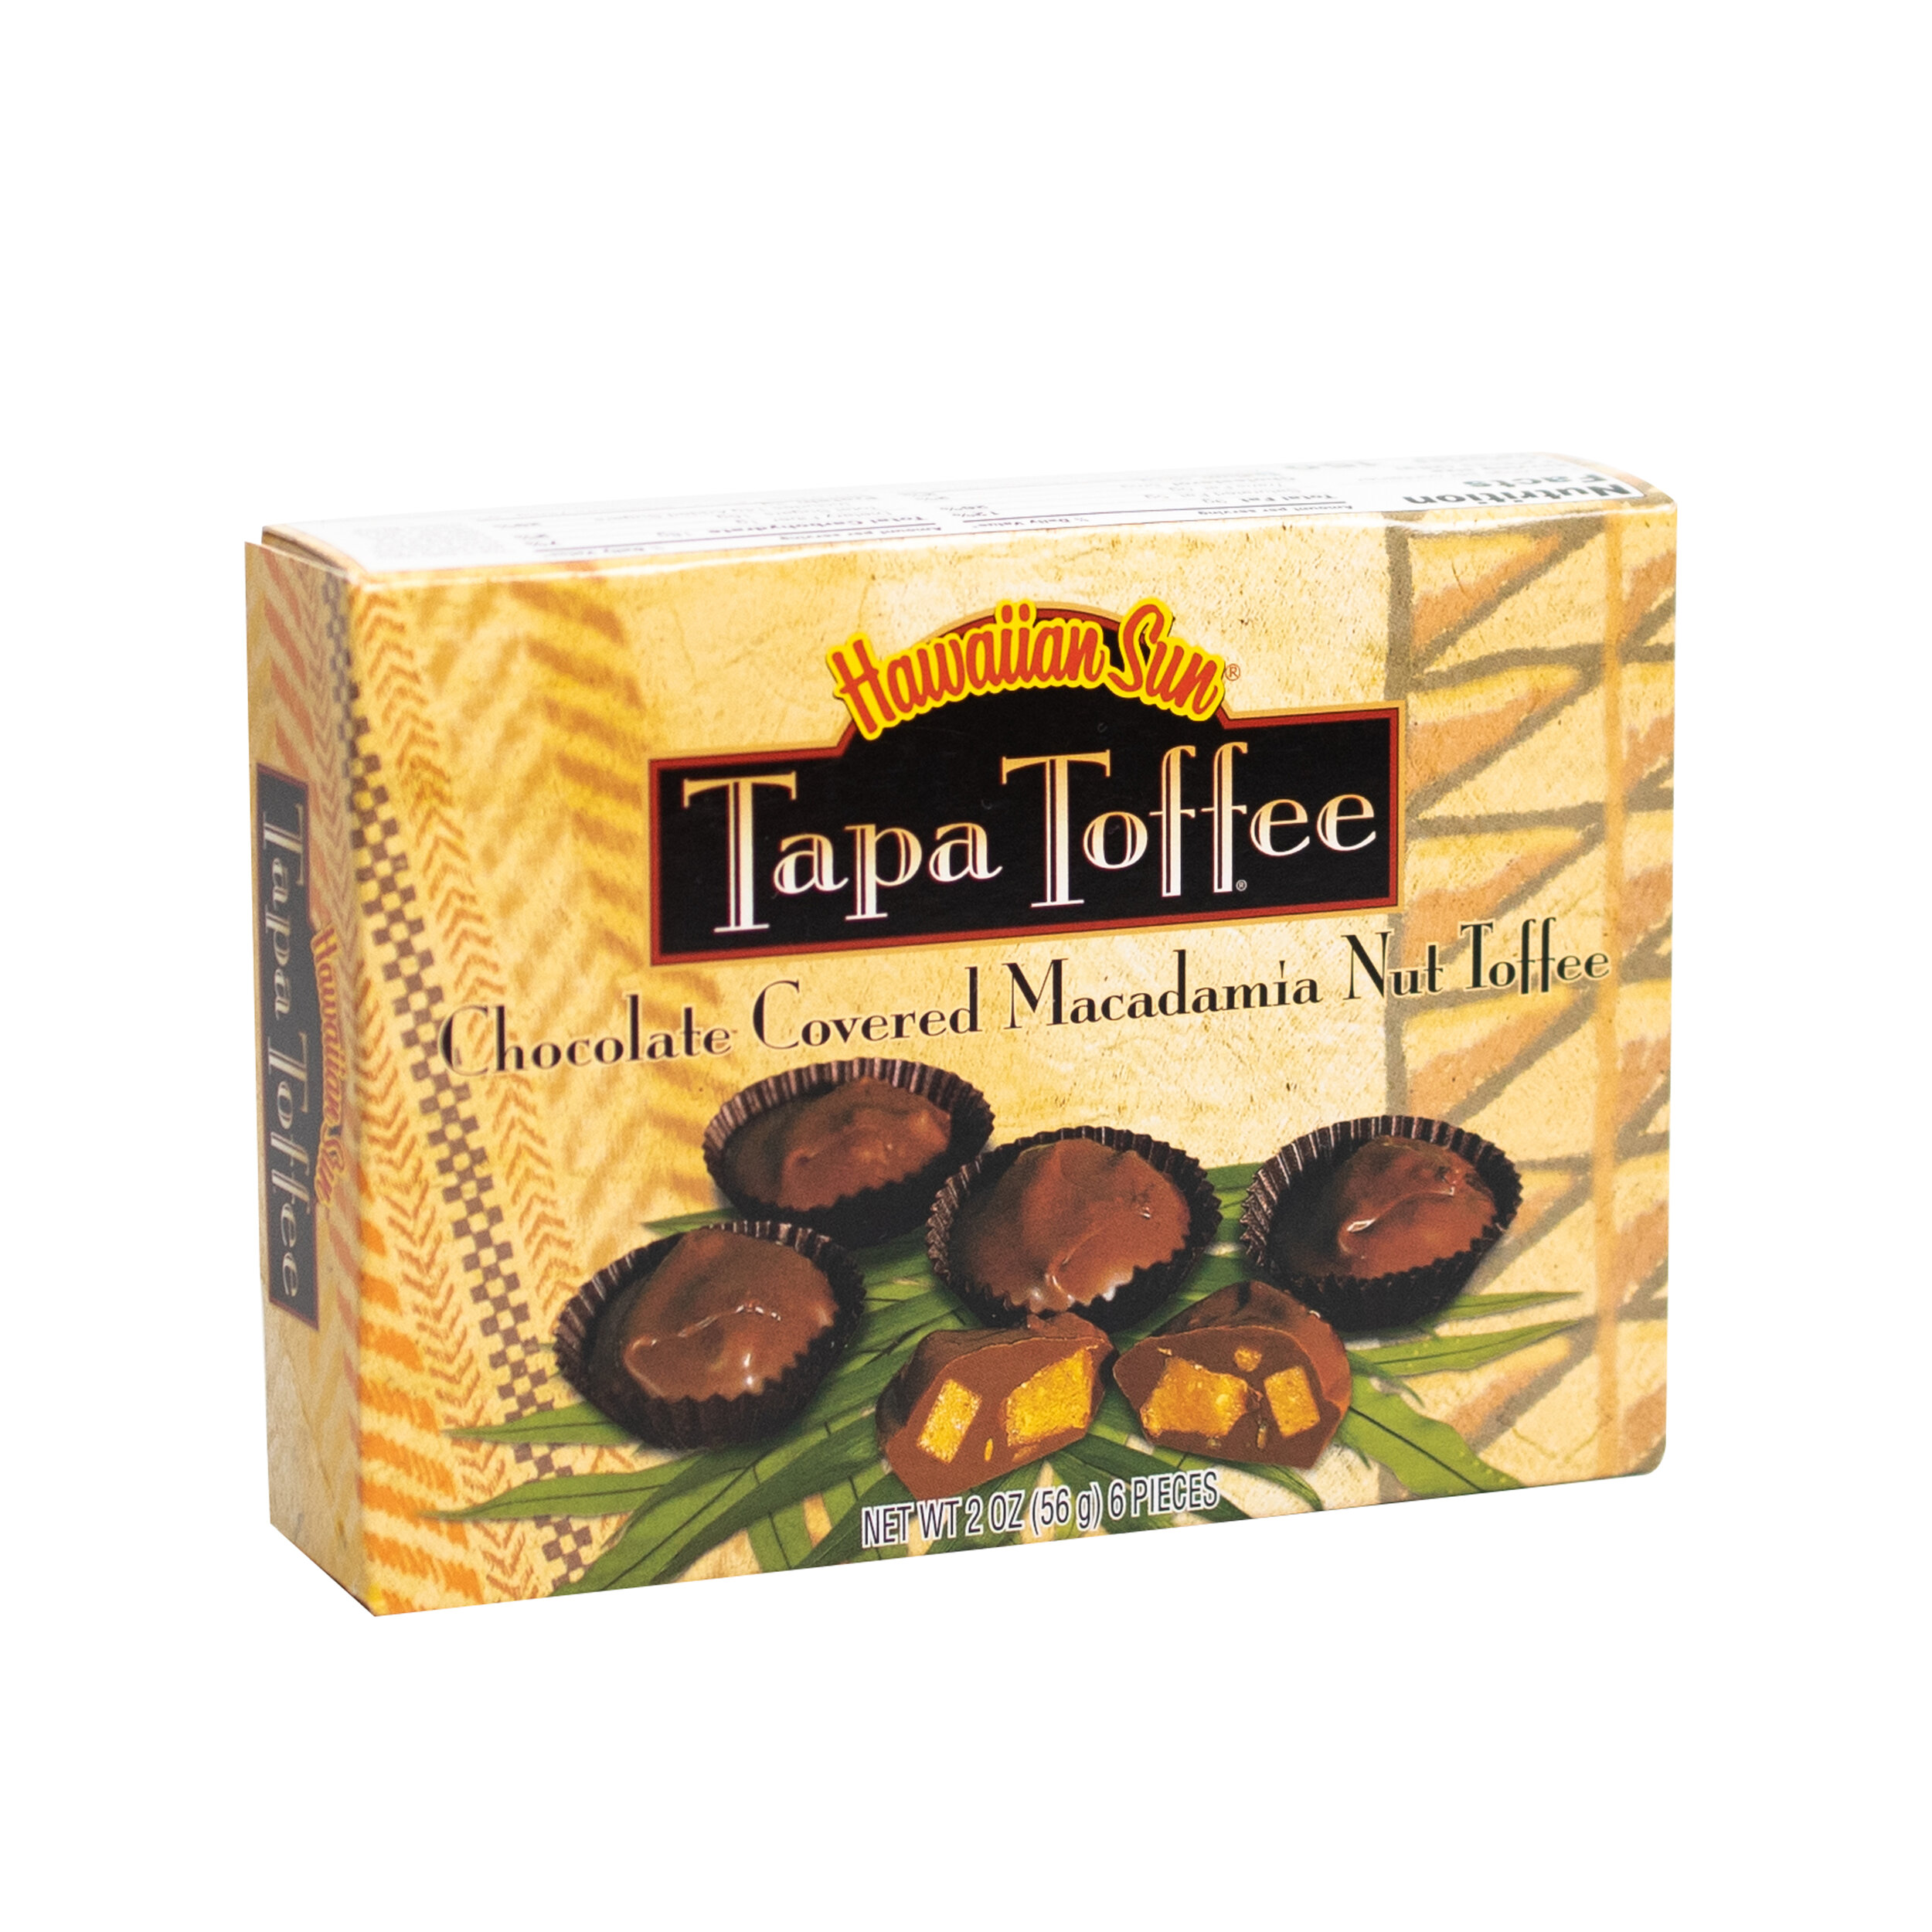 Tapa Toffee Chocolate Covered Macadamia Nuts